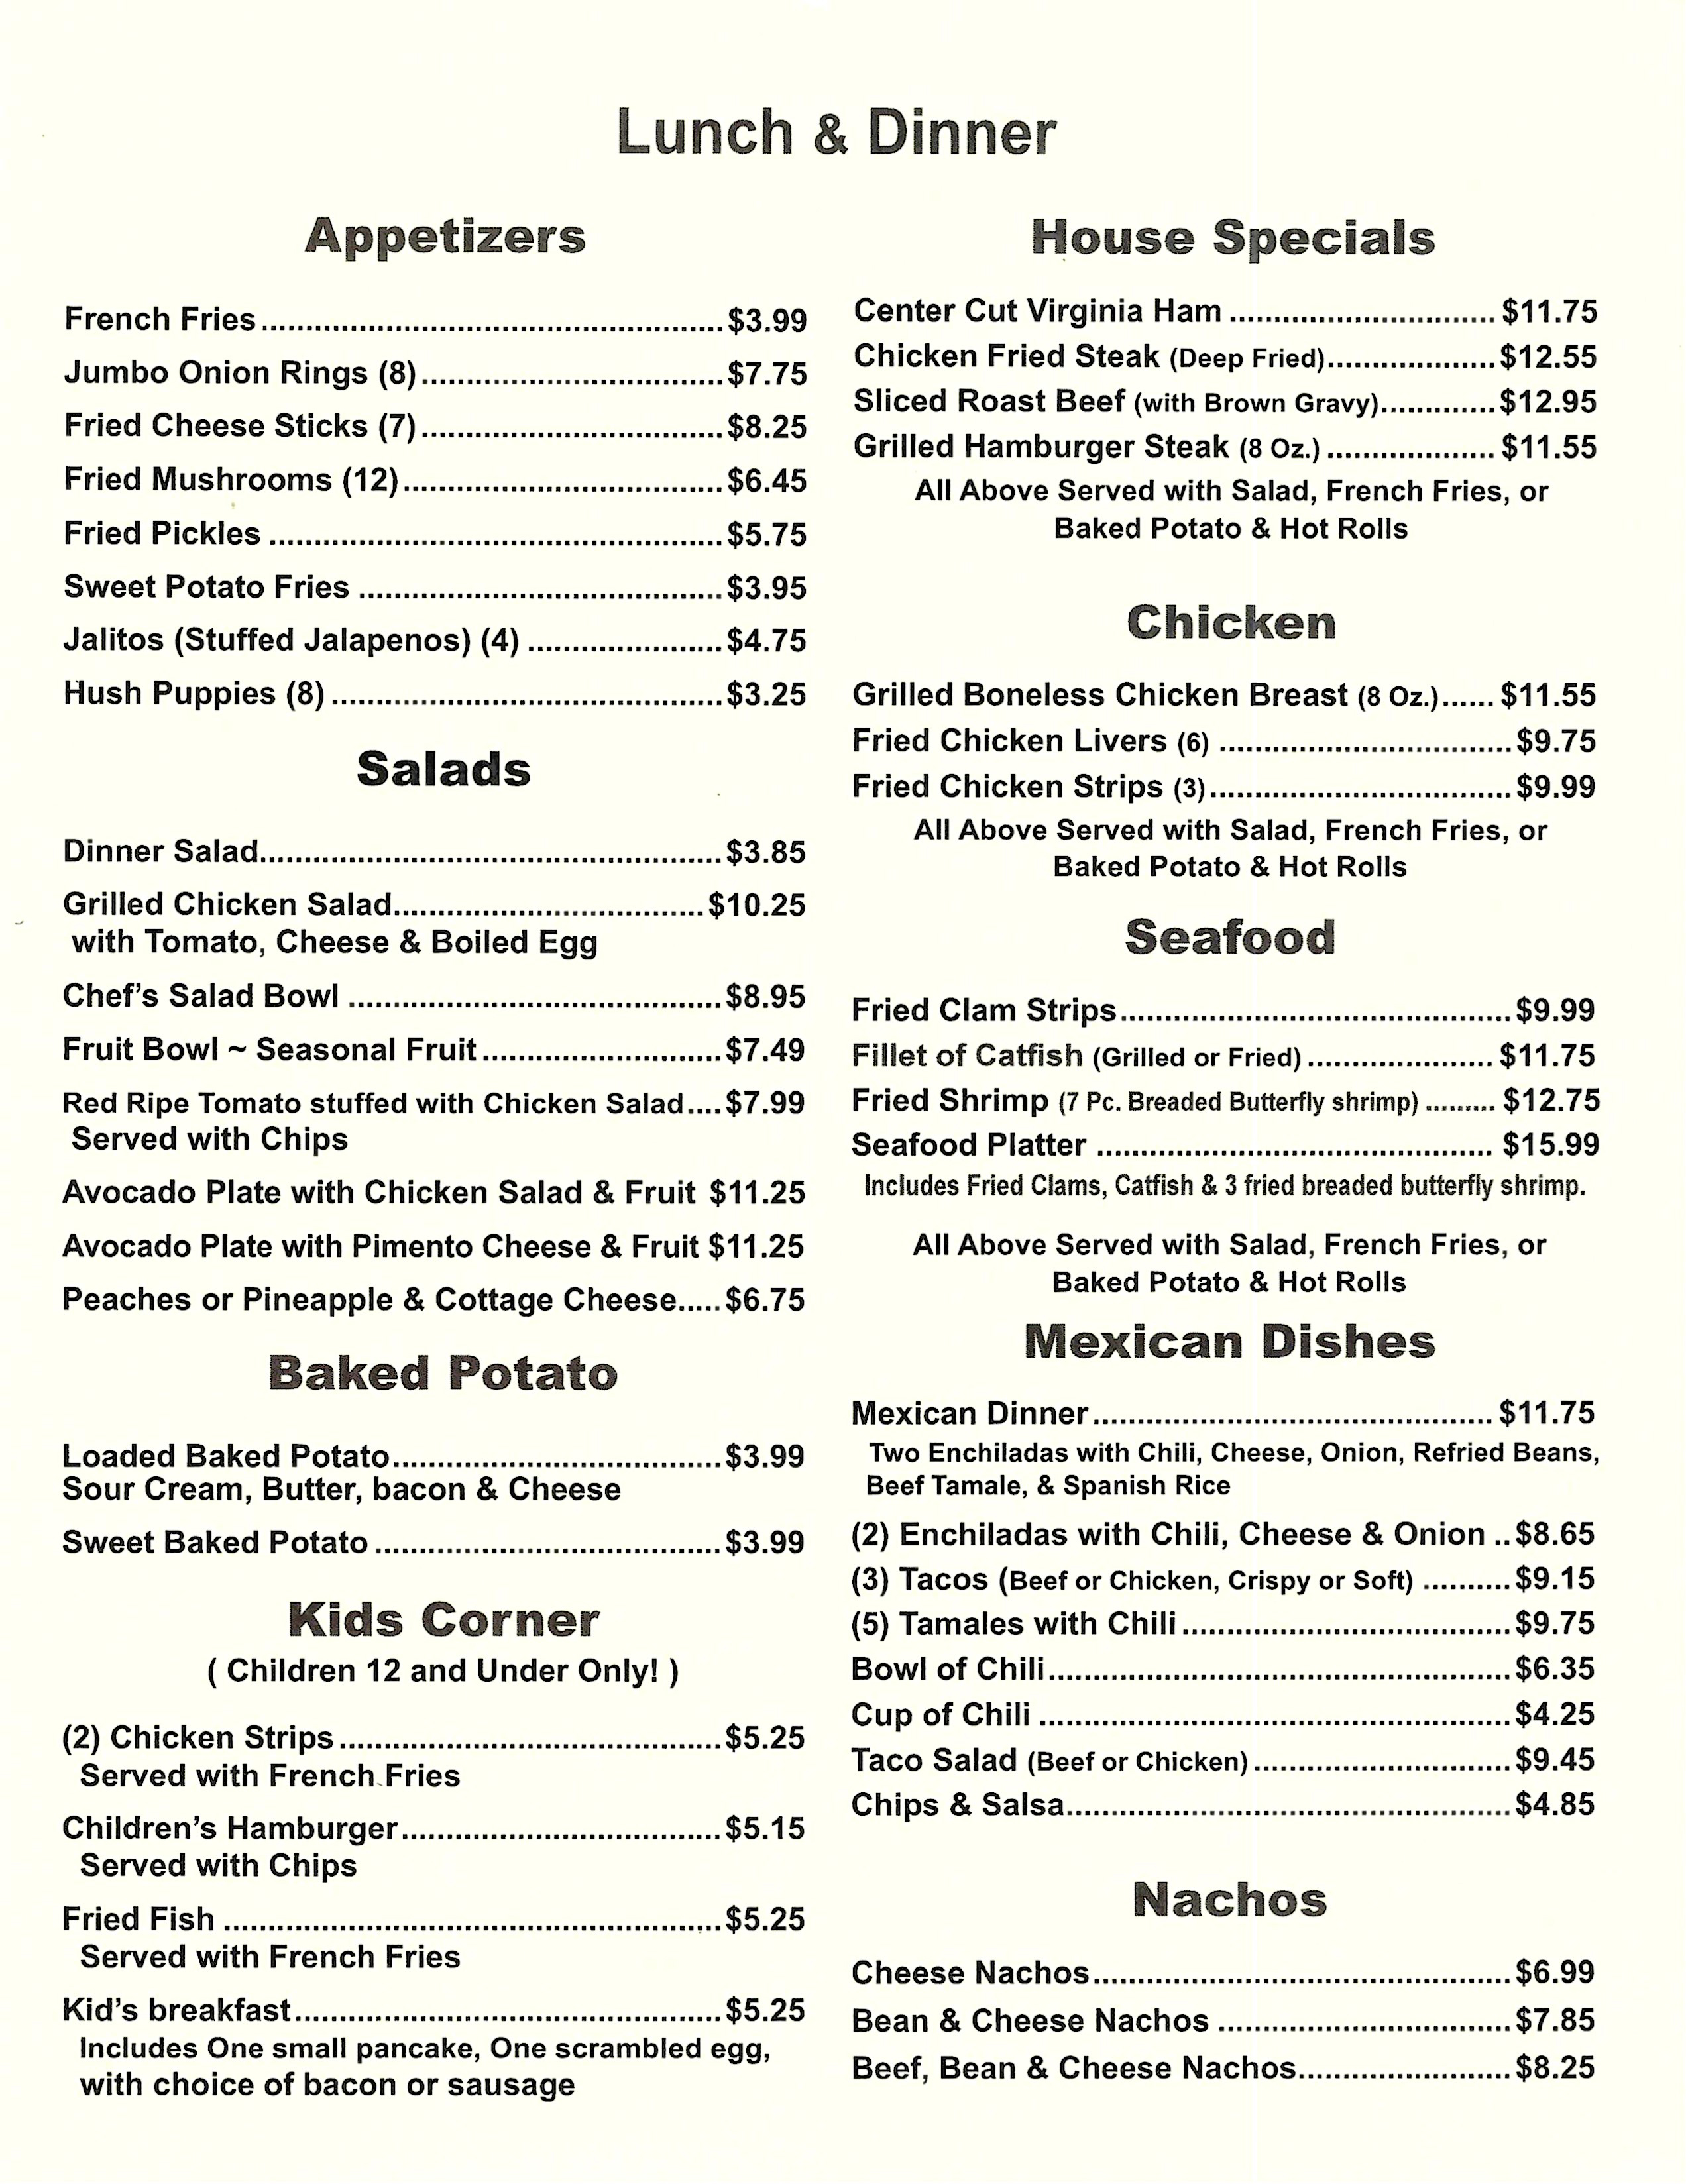 restaurant menu images